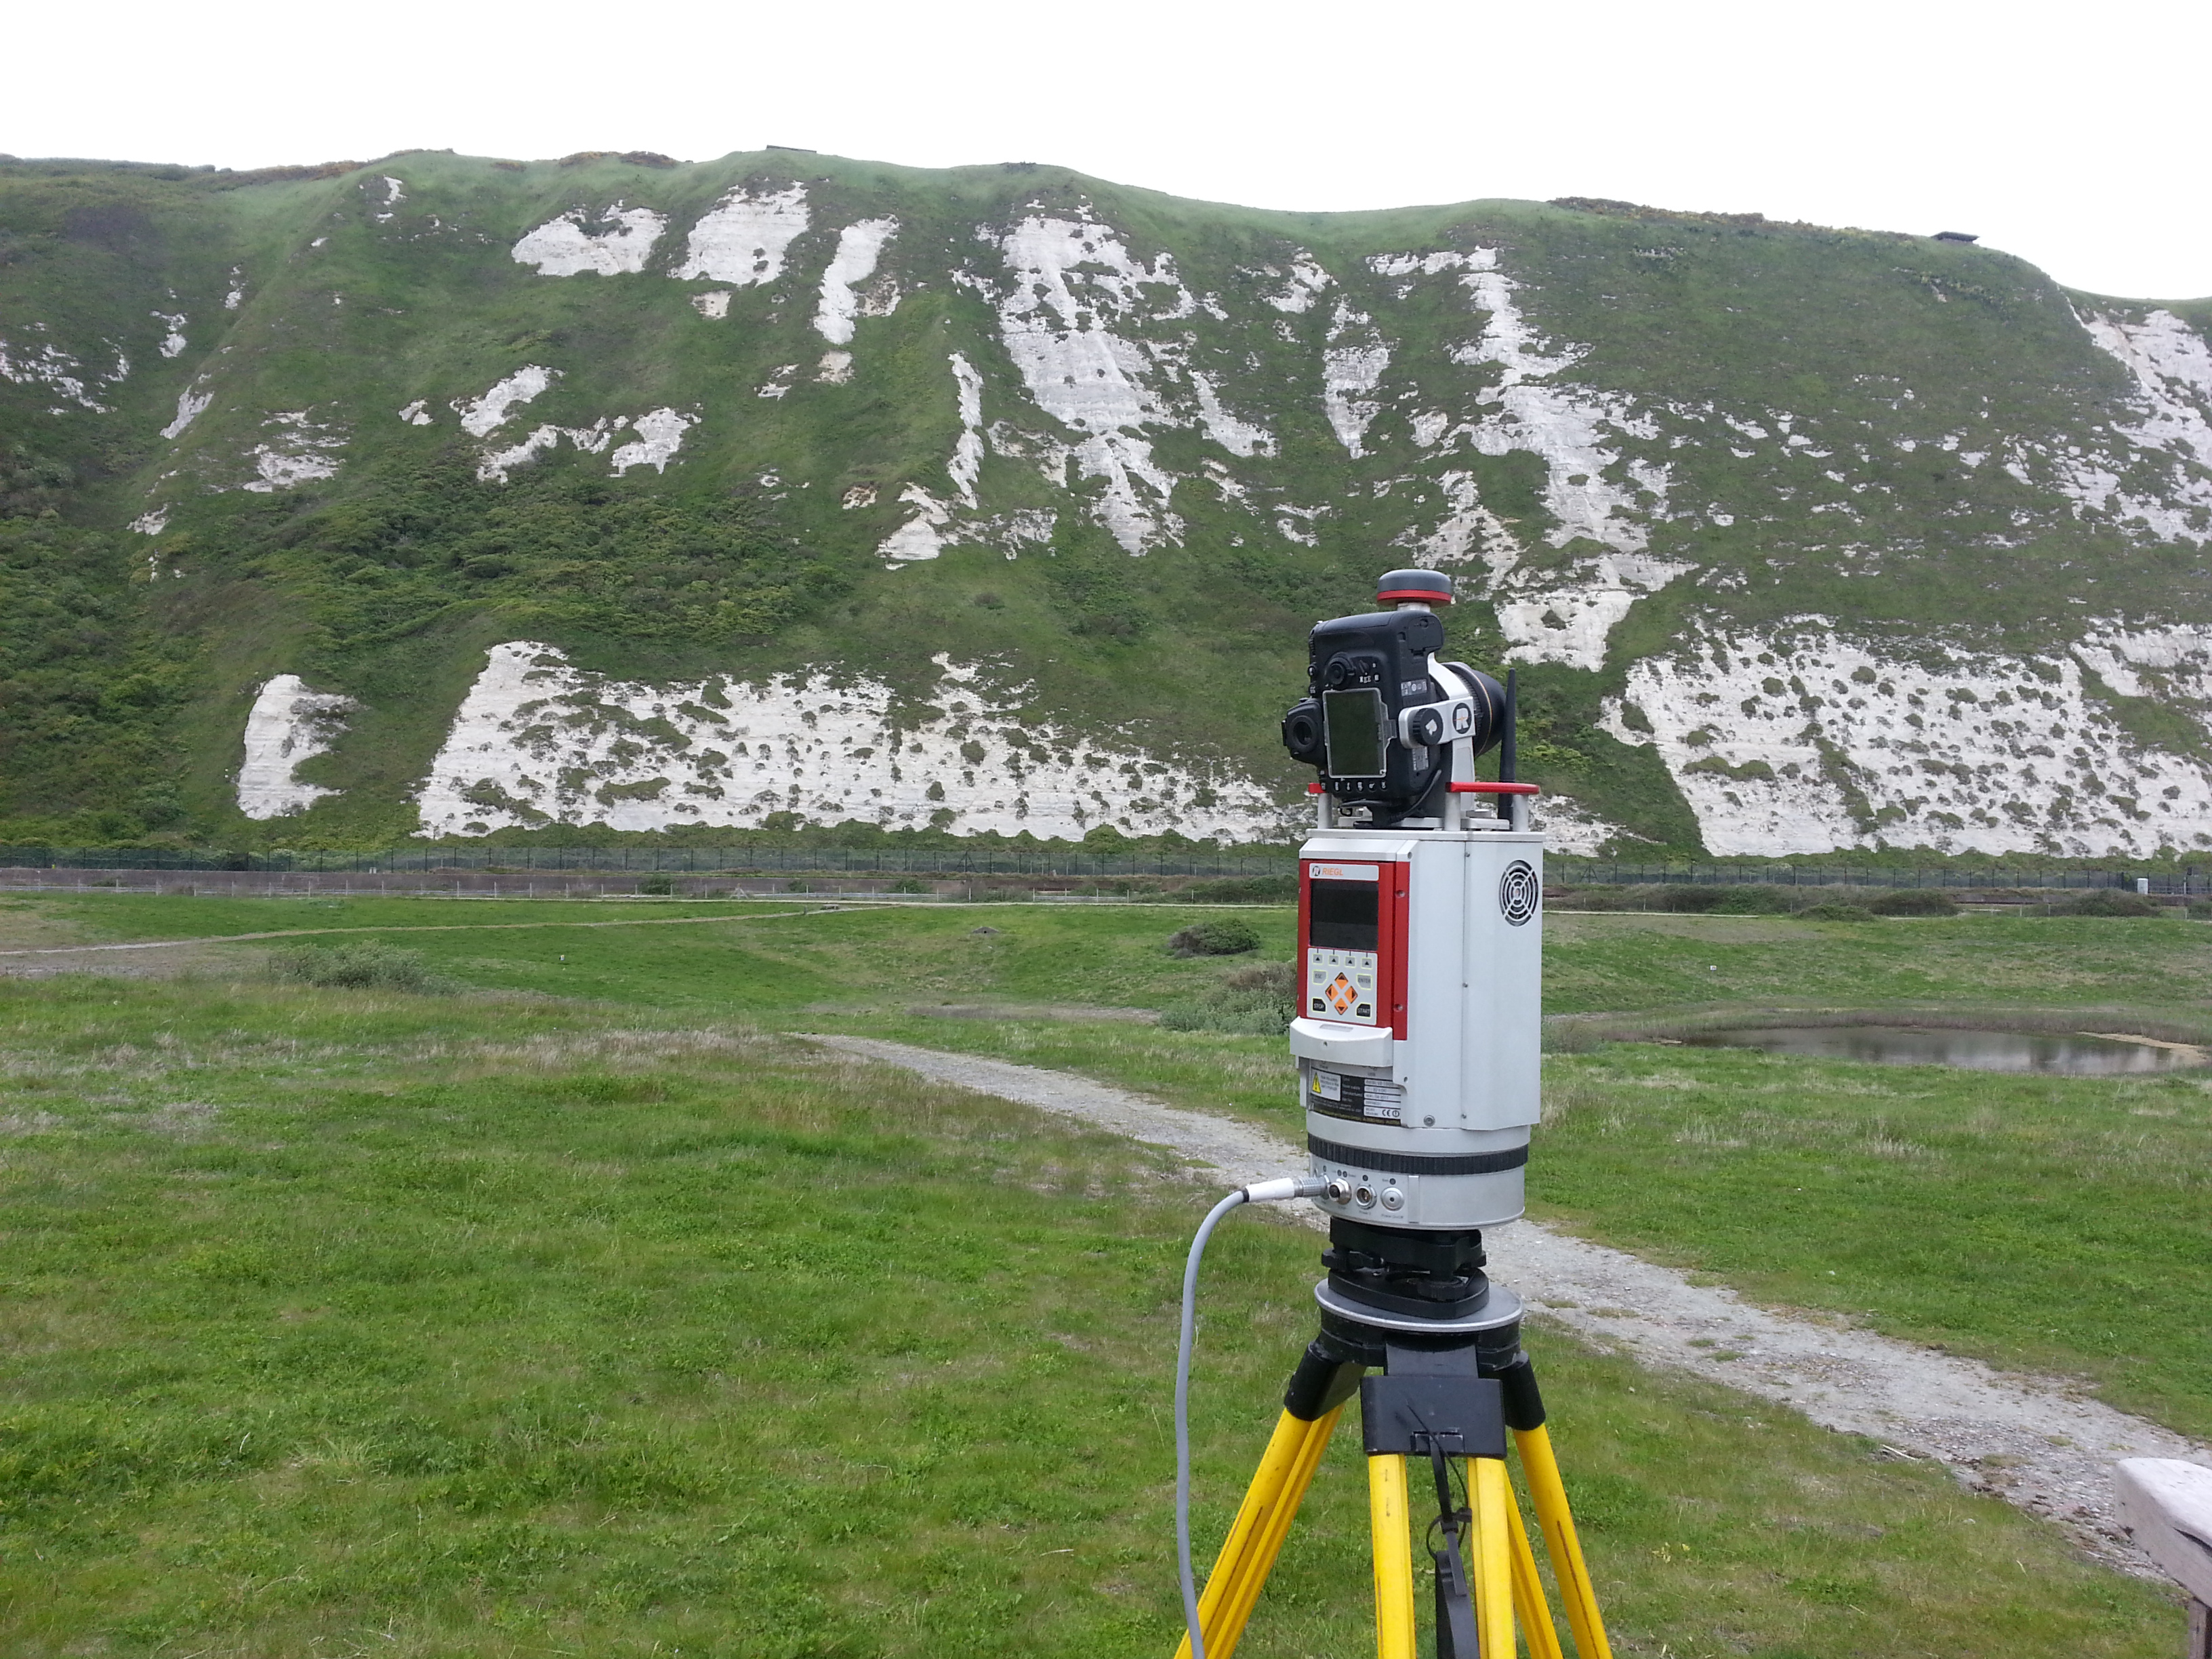 3D laser scanner pointed towards land for surveying